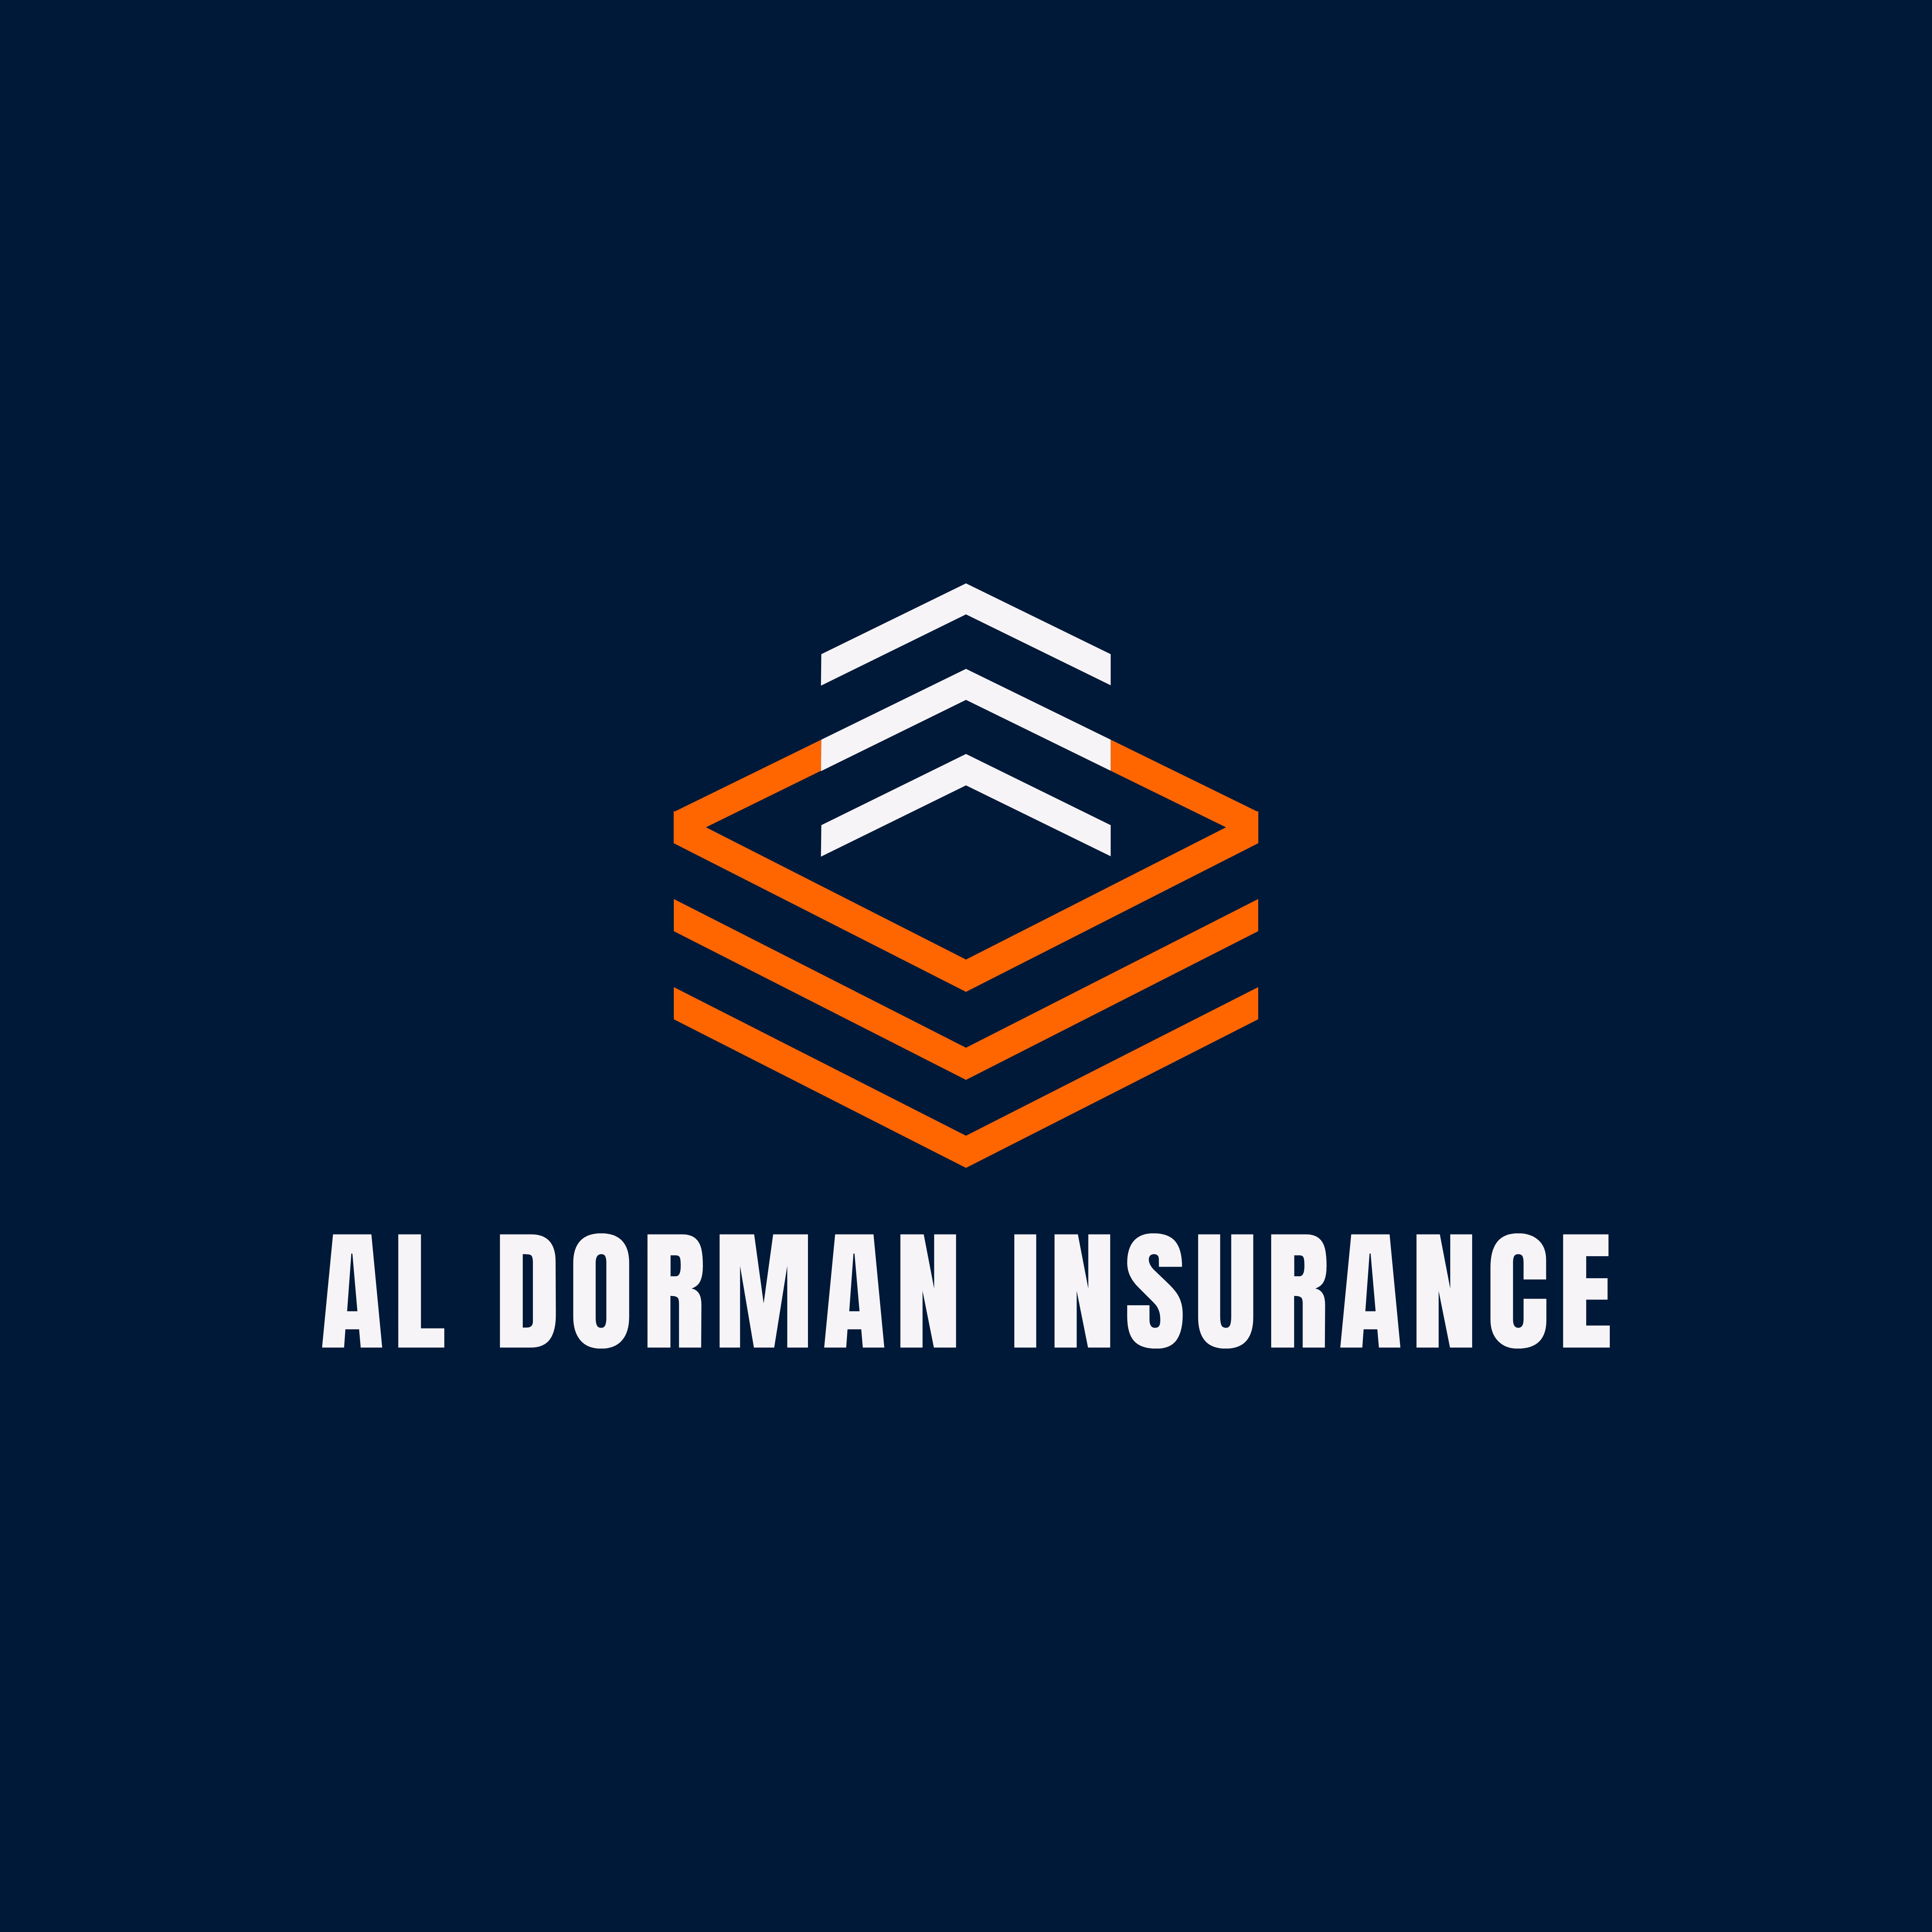 Al Dorman Insurance